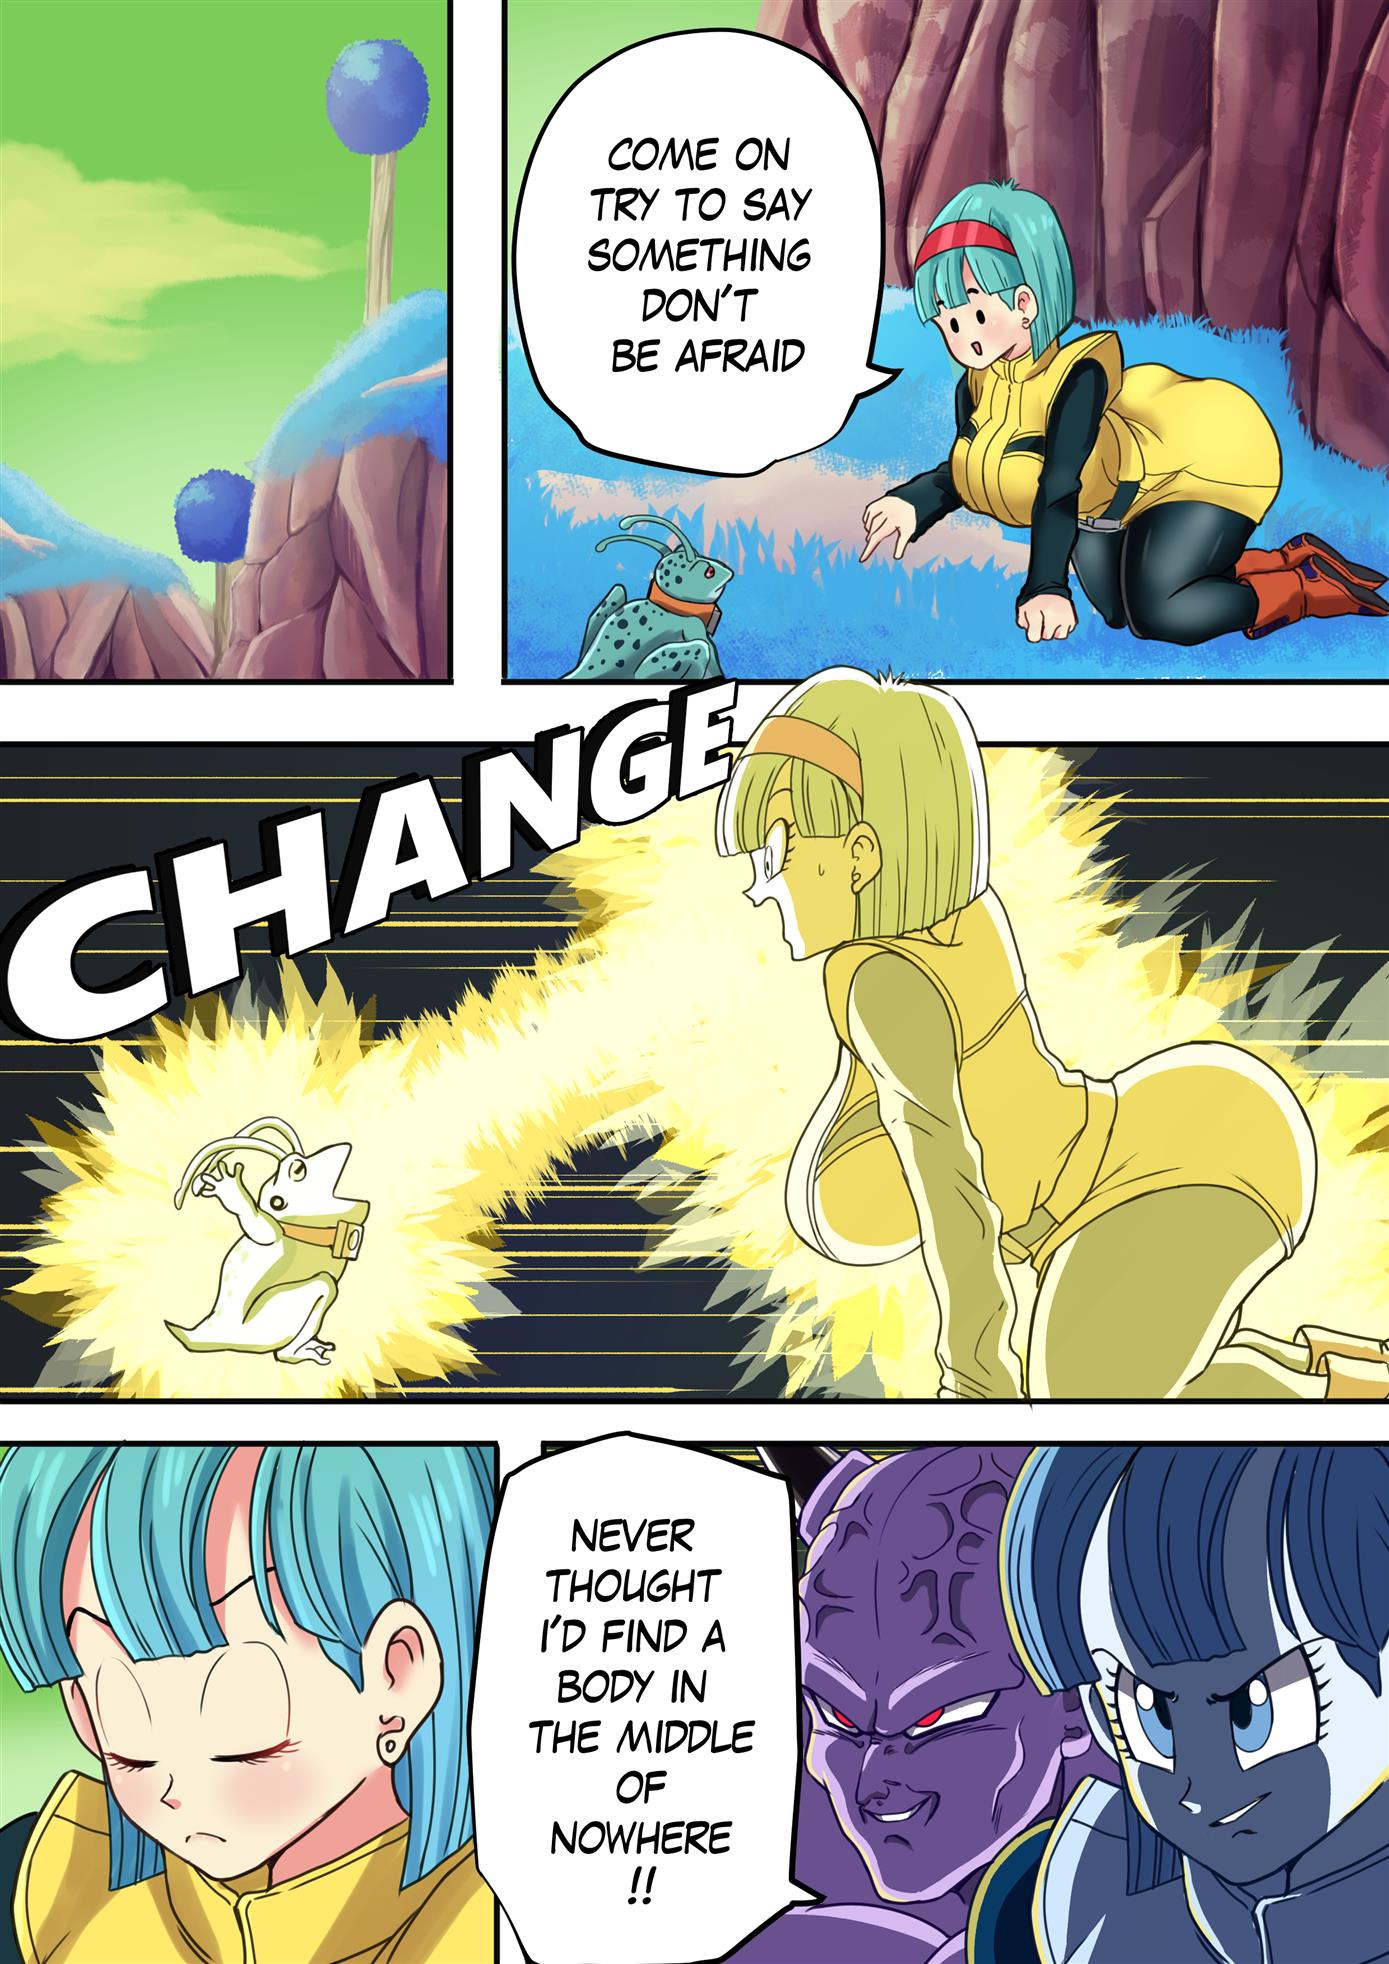 Body Change! (Dragon Ball Z) [TSFSingularity]